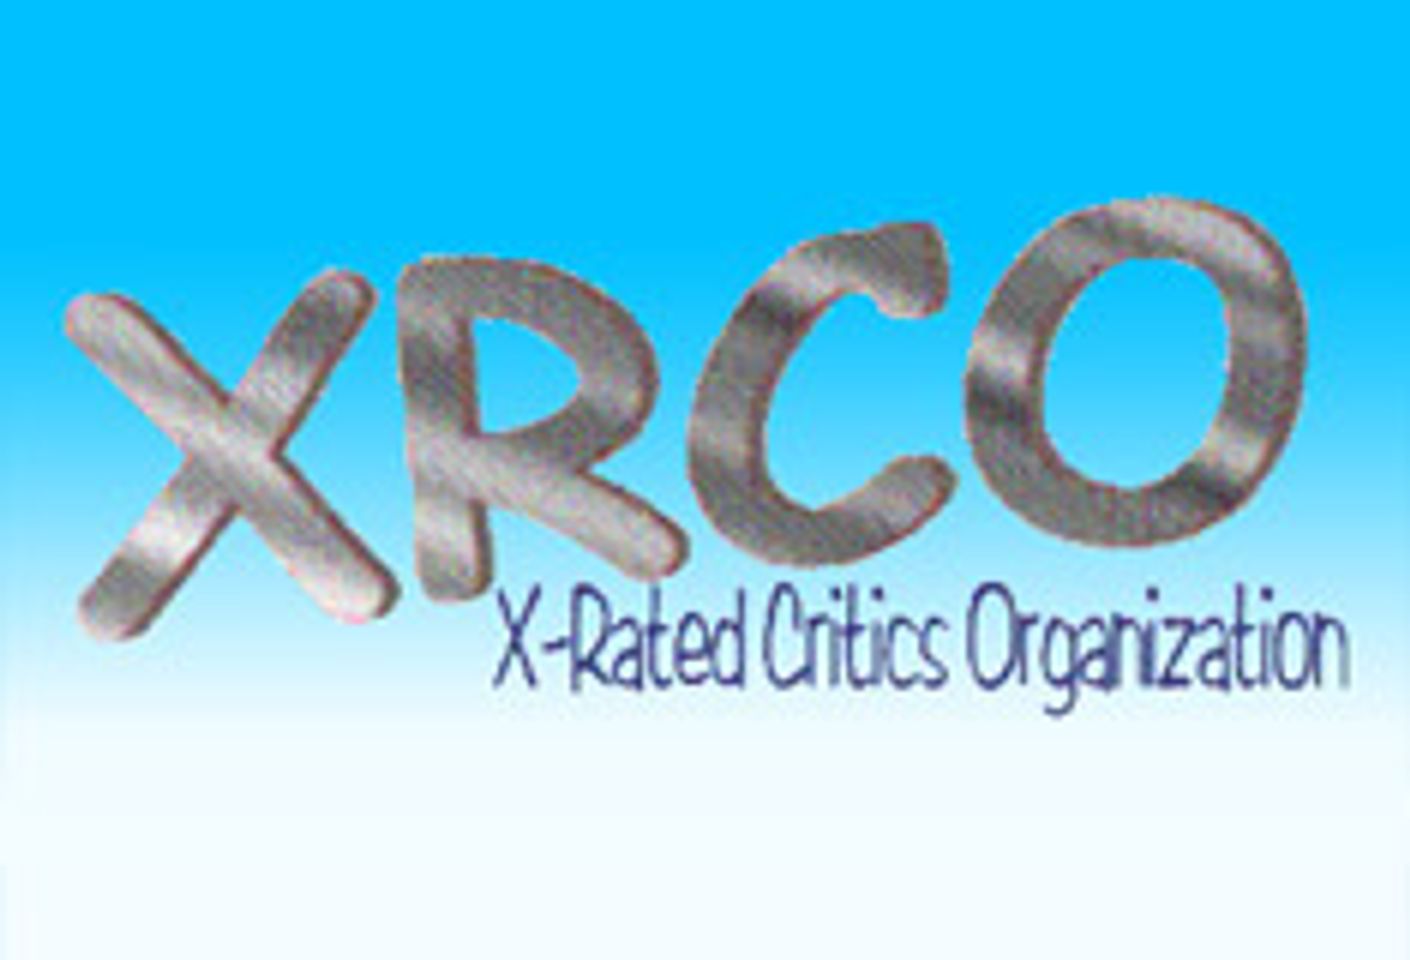 XRCO Award Nominations Announced